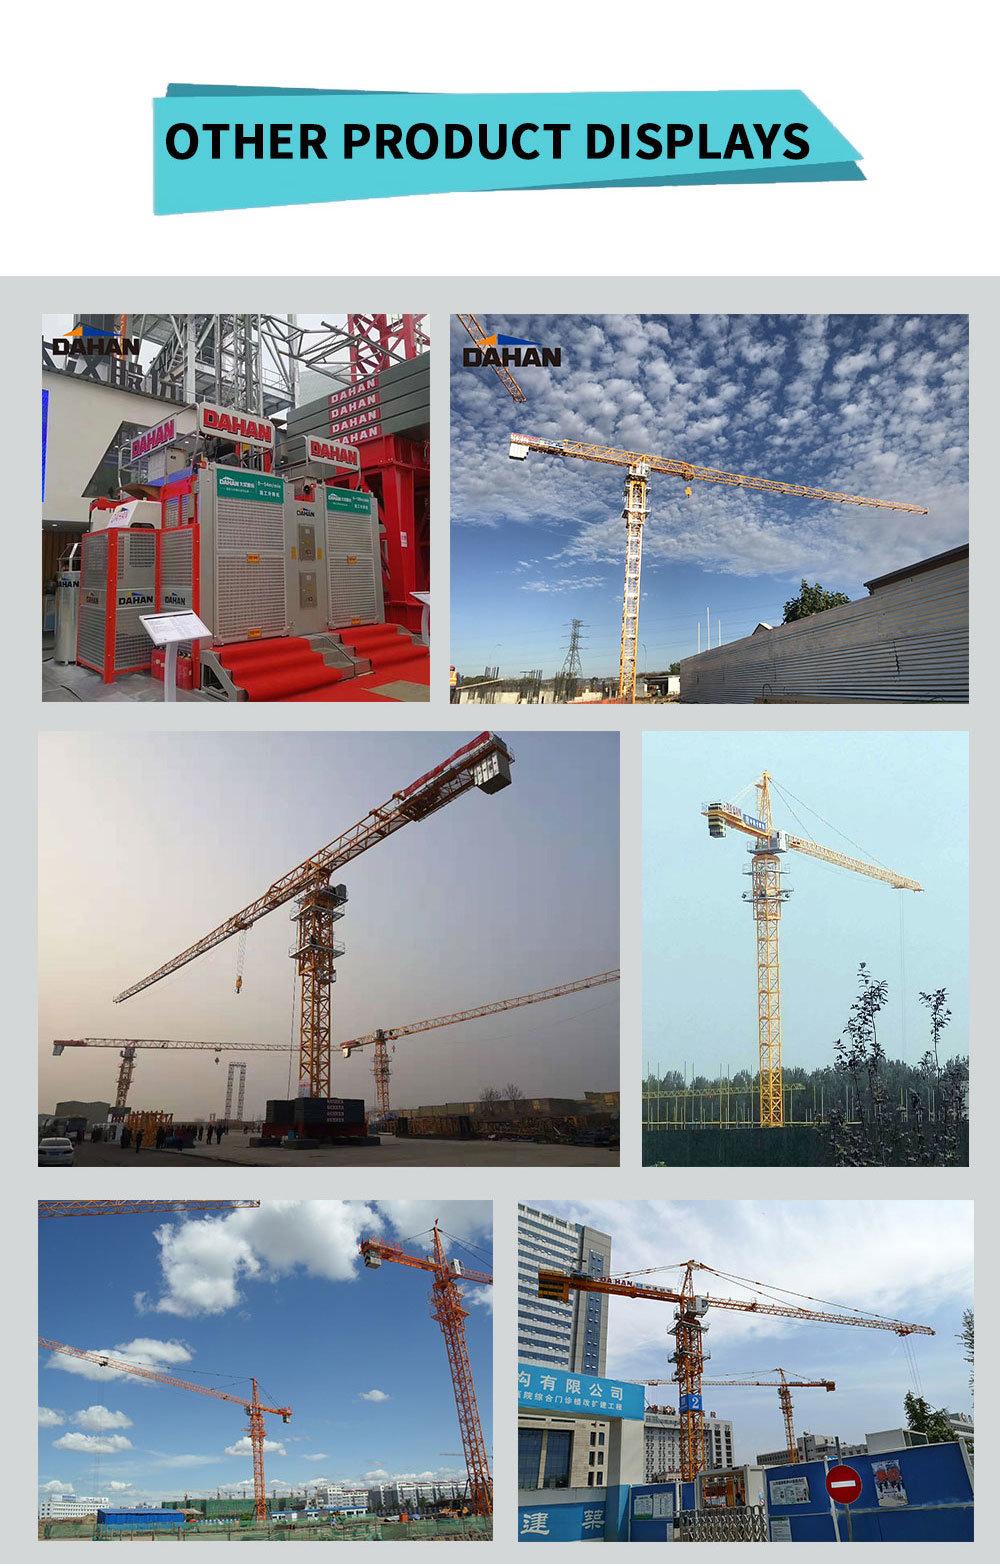 Large Cranes Construction Qtz250 (7032) with 70m Jib Length